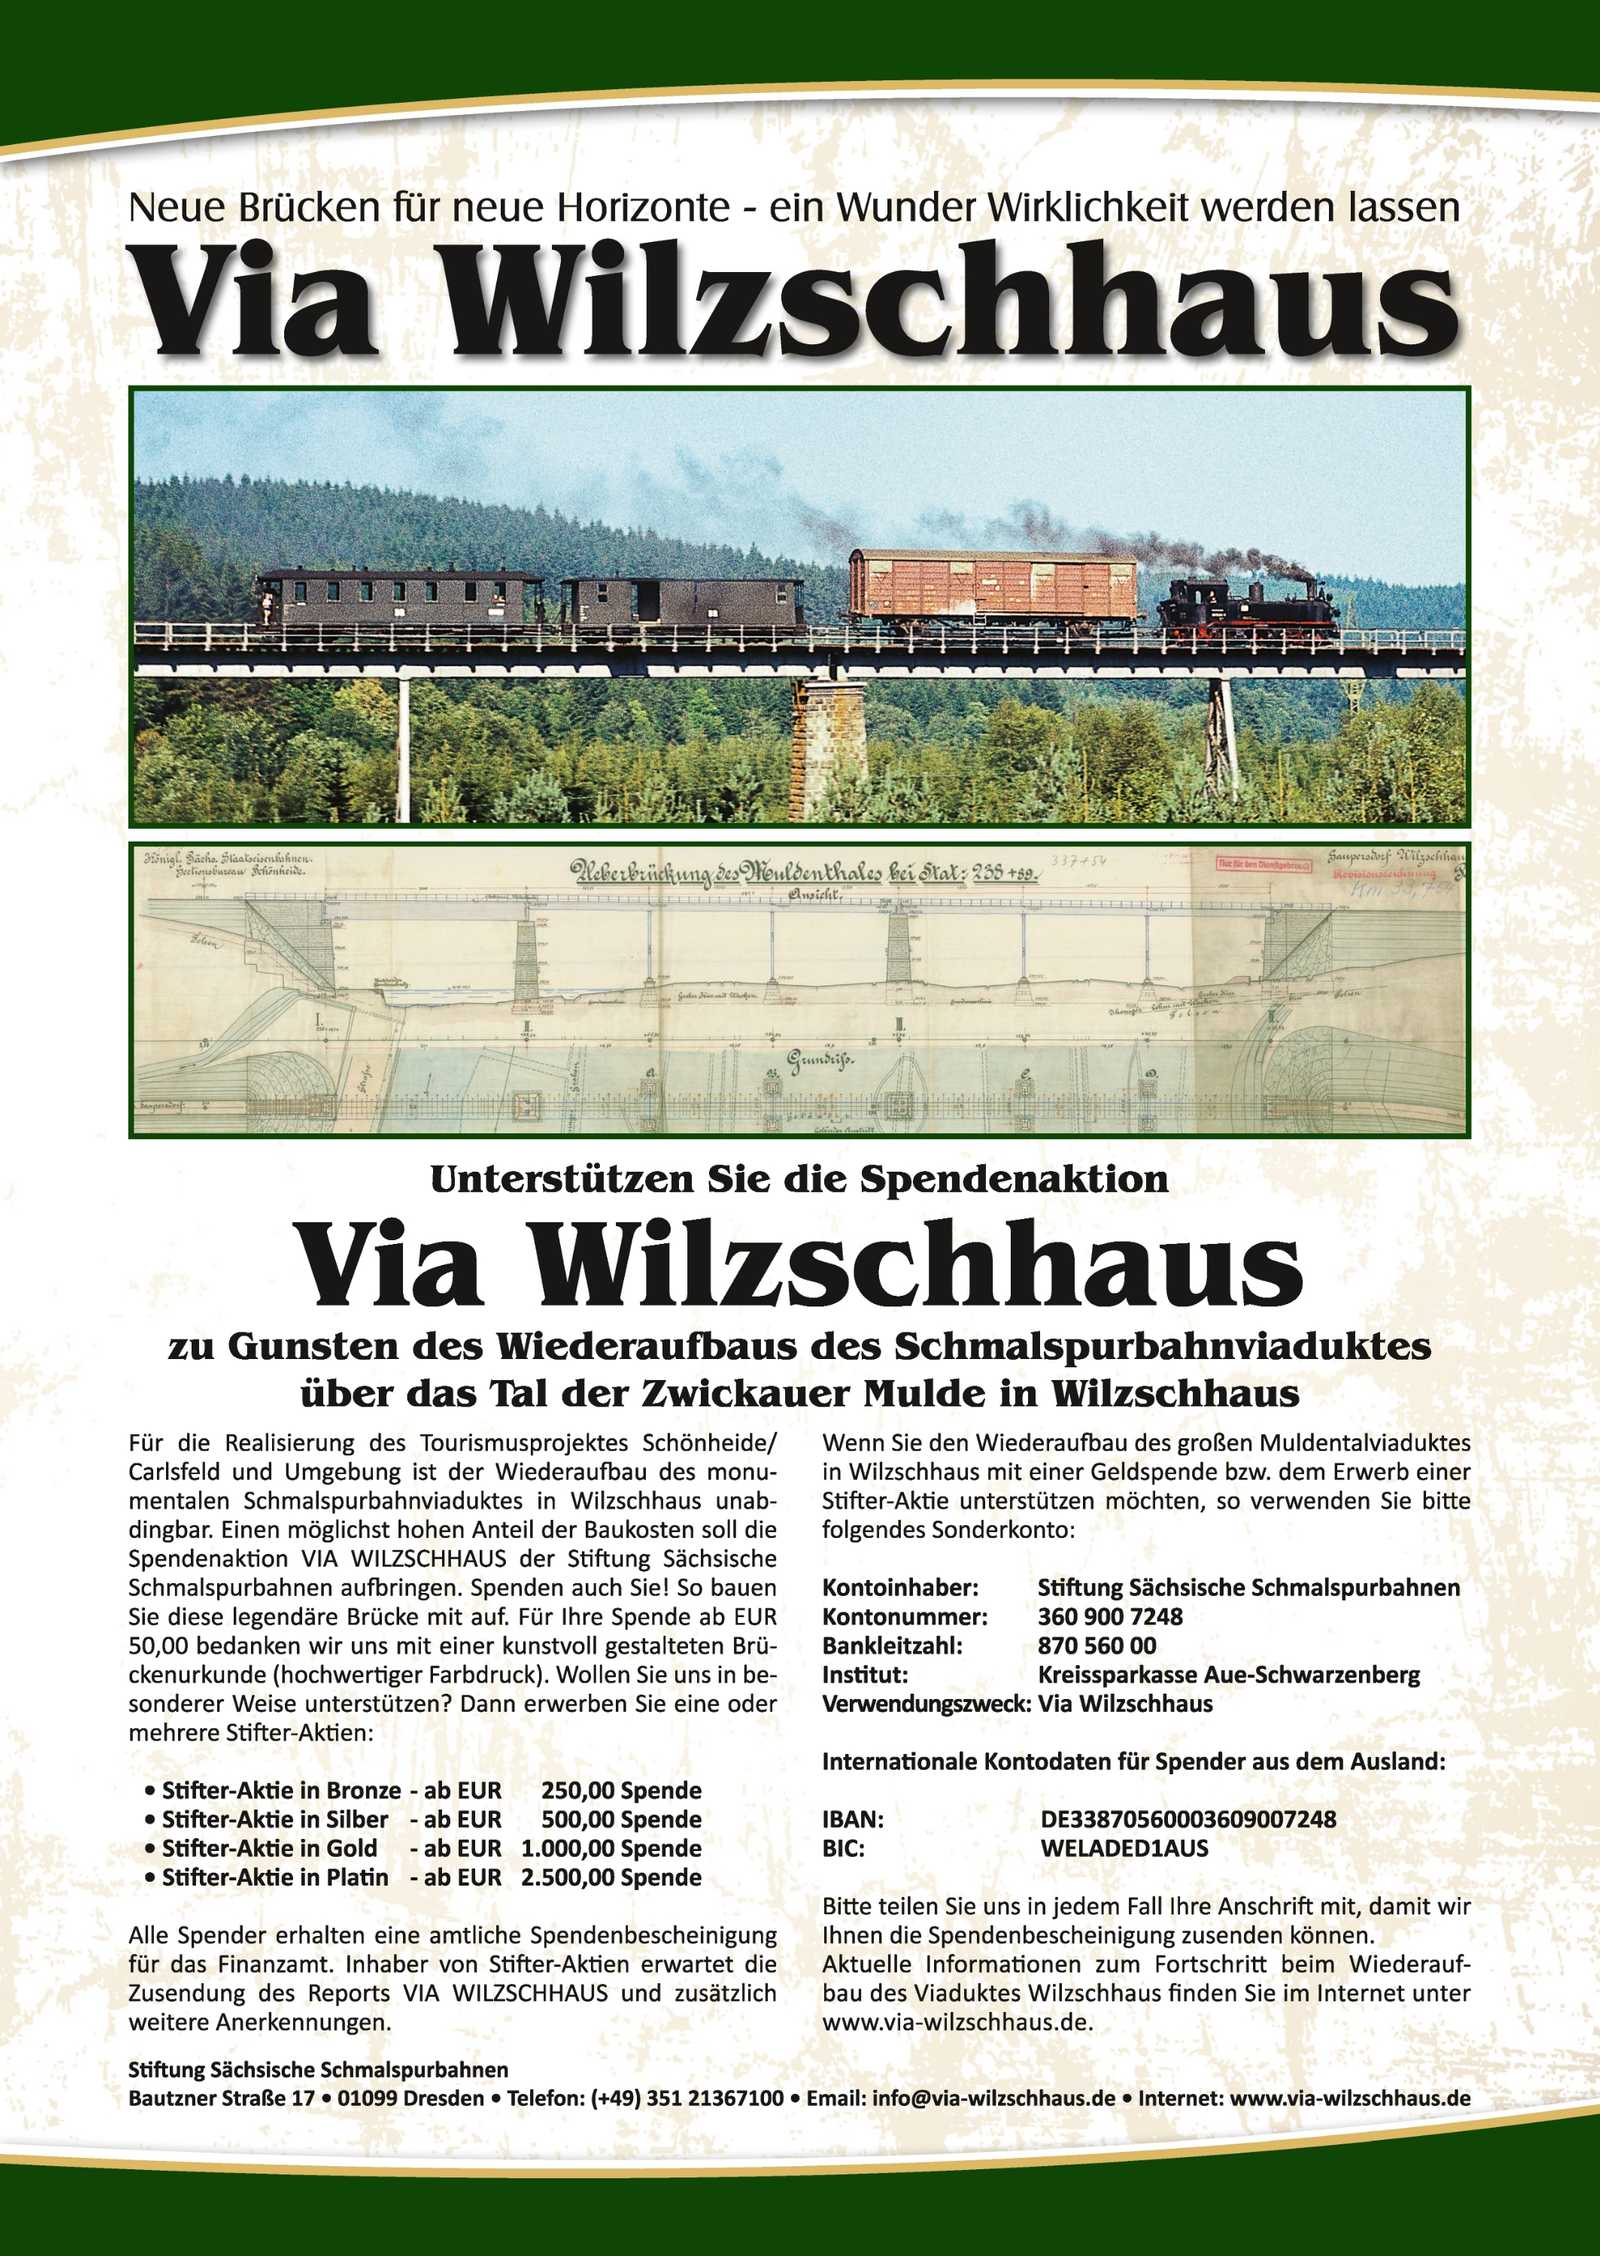 Spendenaufruf "Via Wilzschhaus".